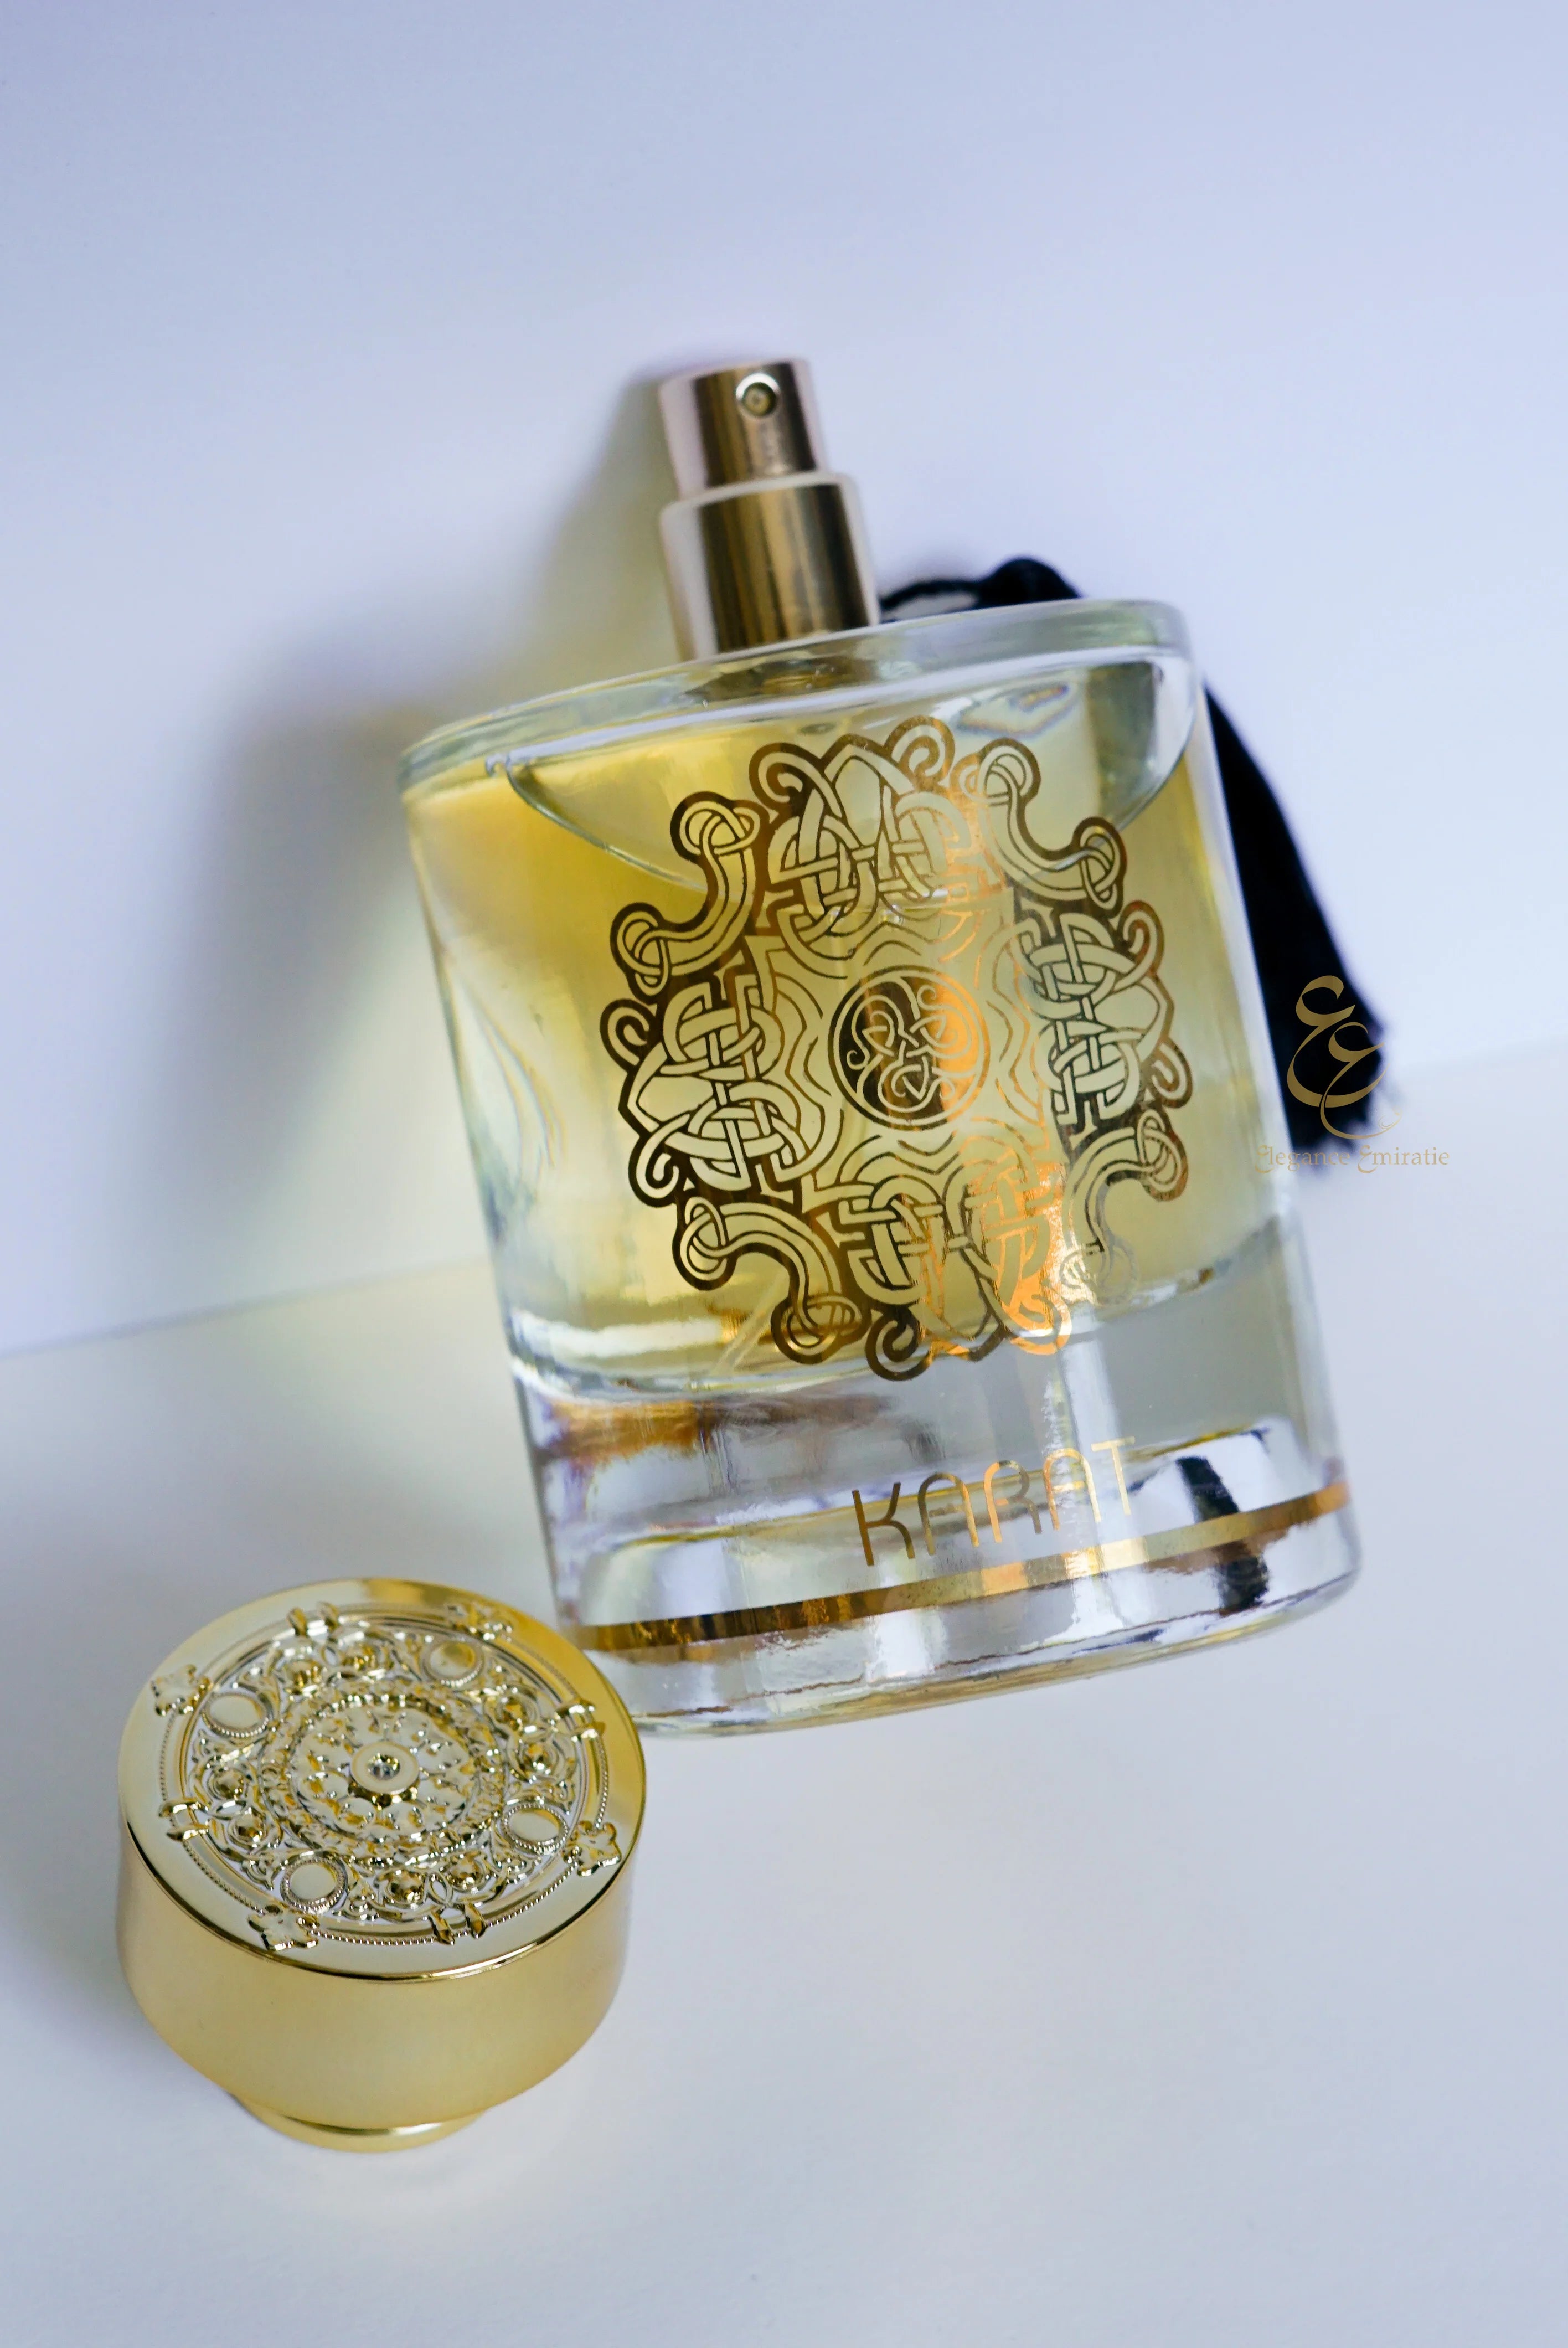 Why choose Karat perfume from Maison Alhambra